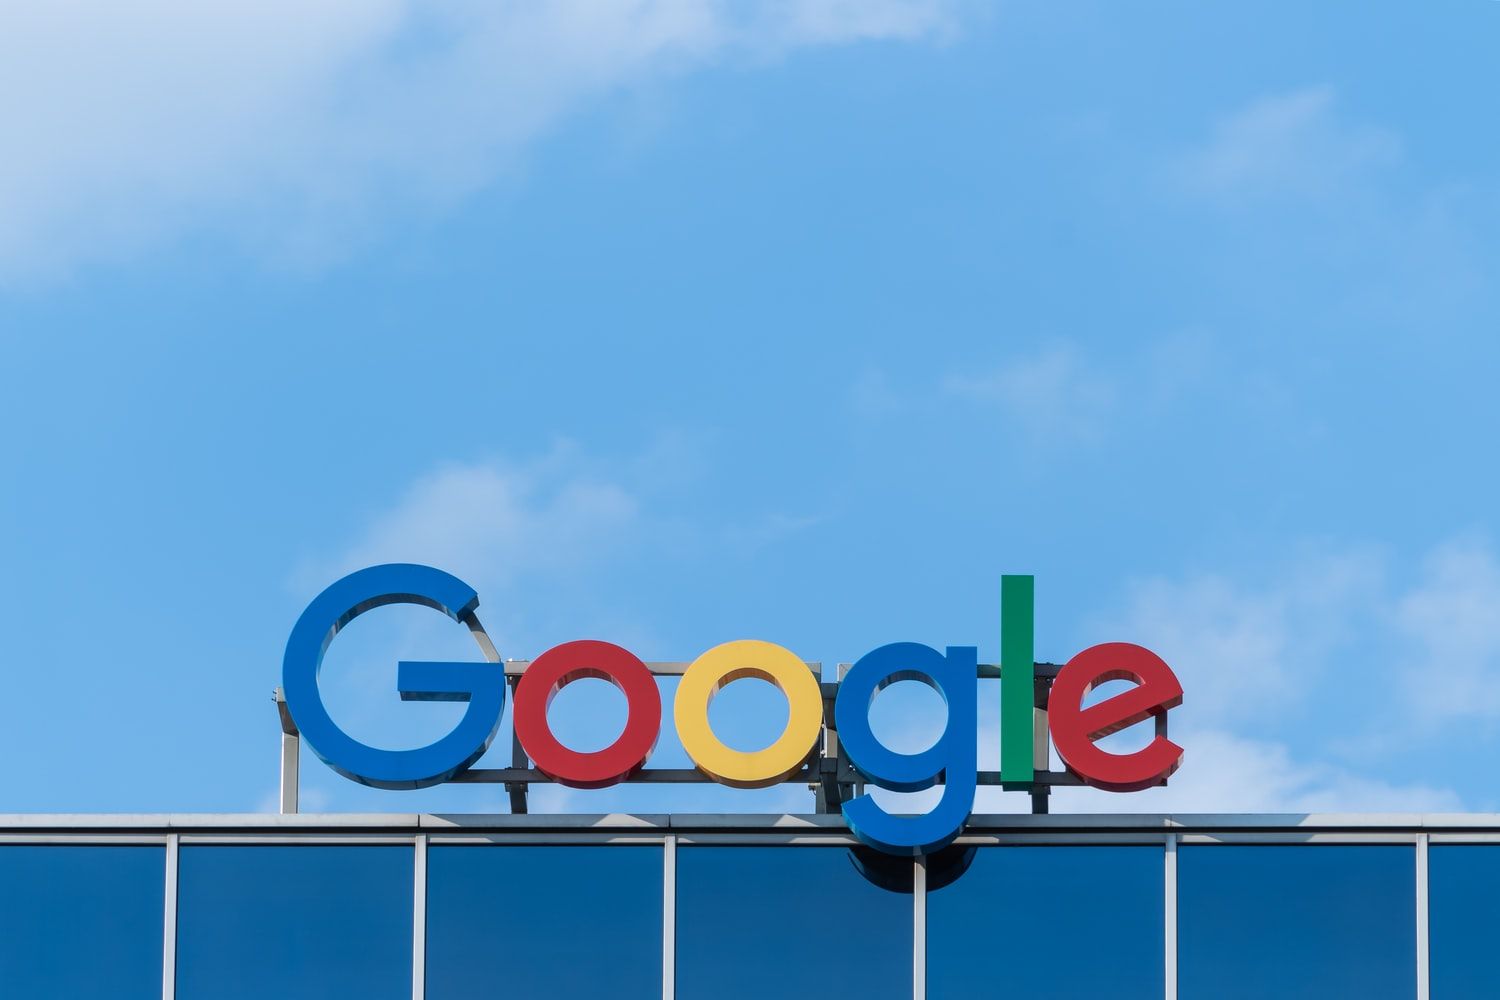 Google to invest $1 billion in deals with news partners: CEO Sundar Pichai